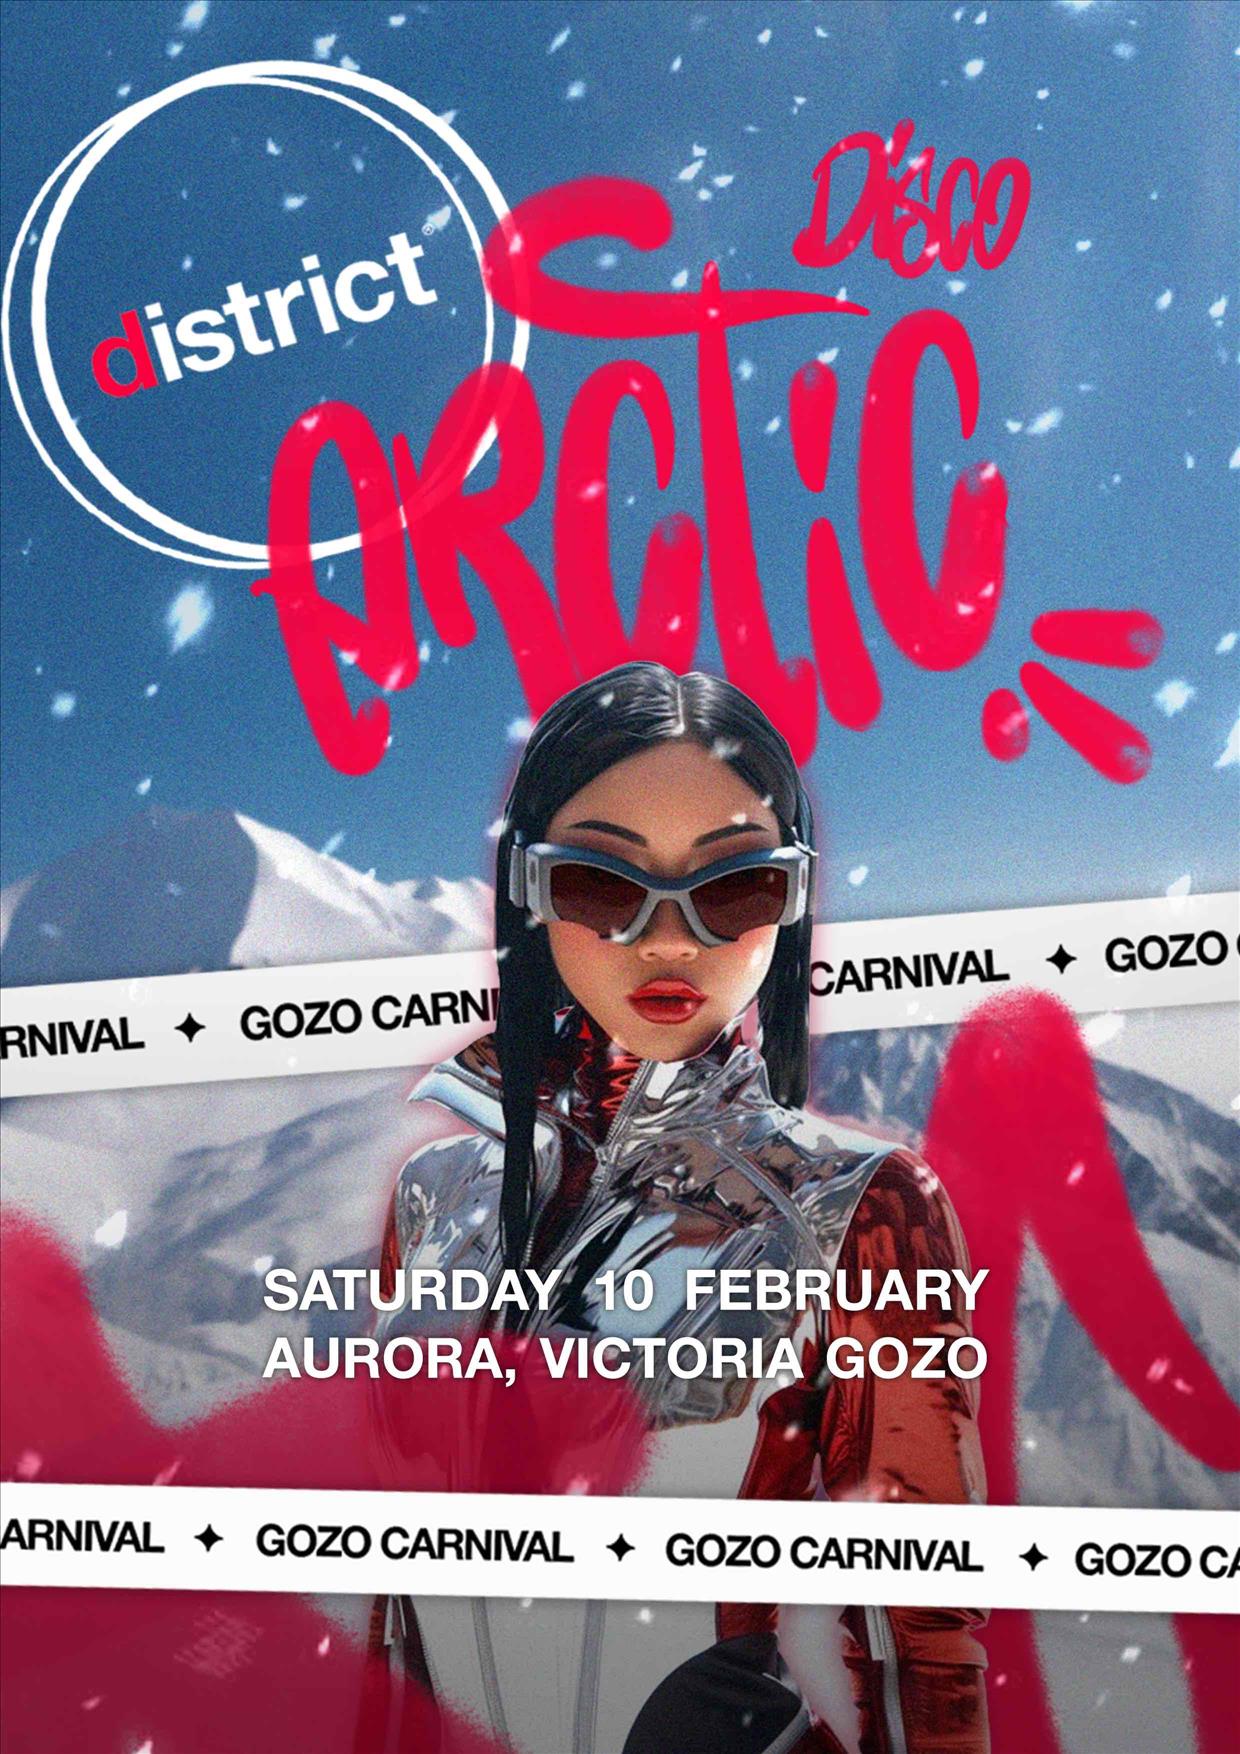 DISTRICT: ARCTIC DISCO - Gozo Carnival poster